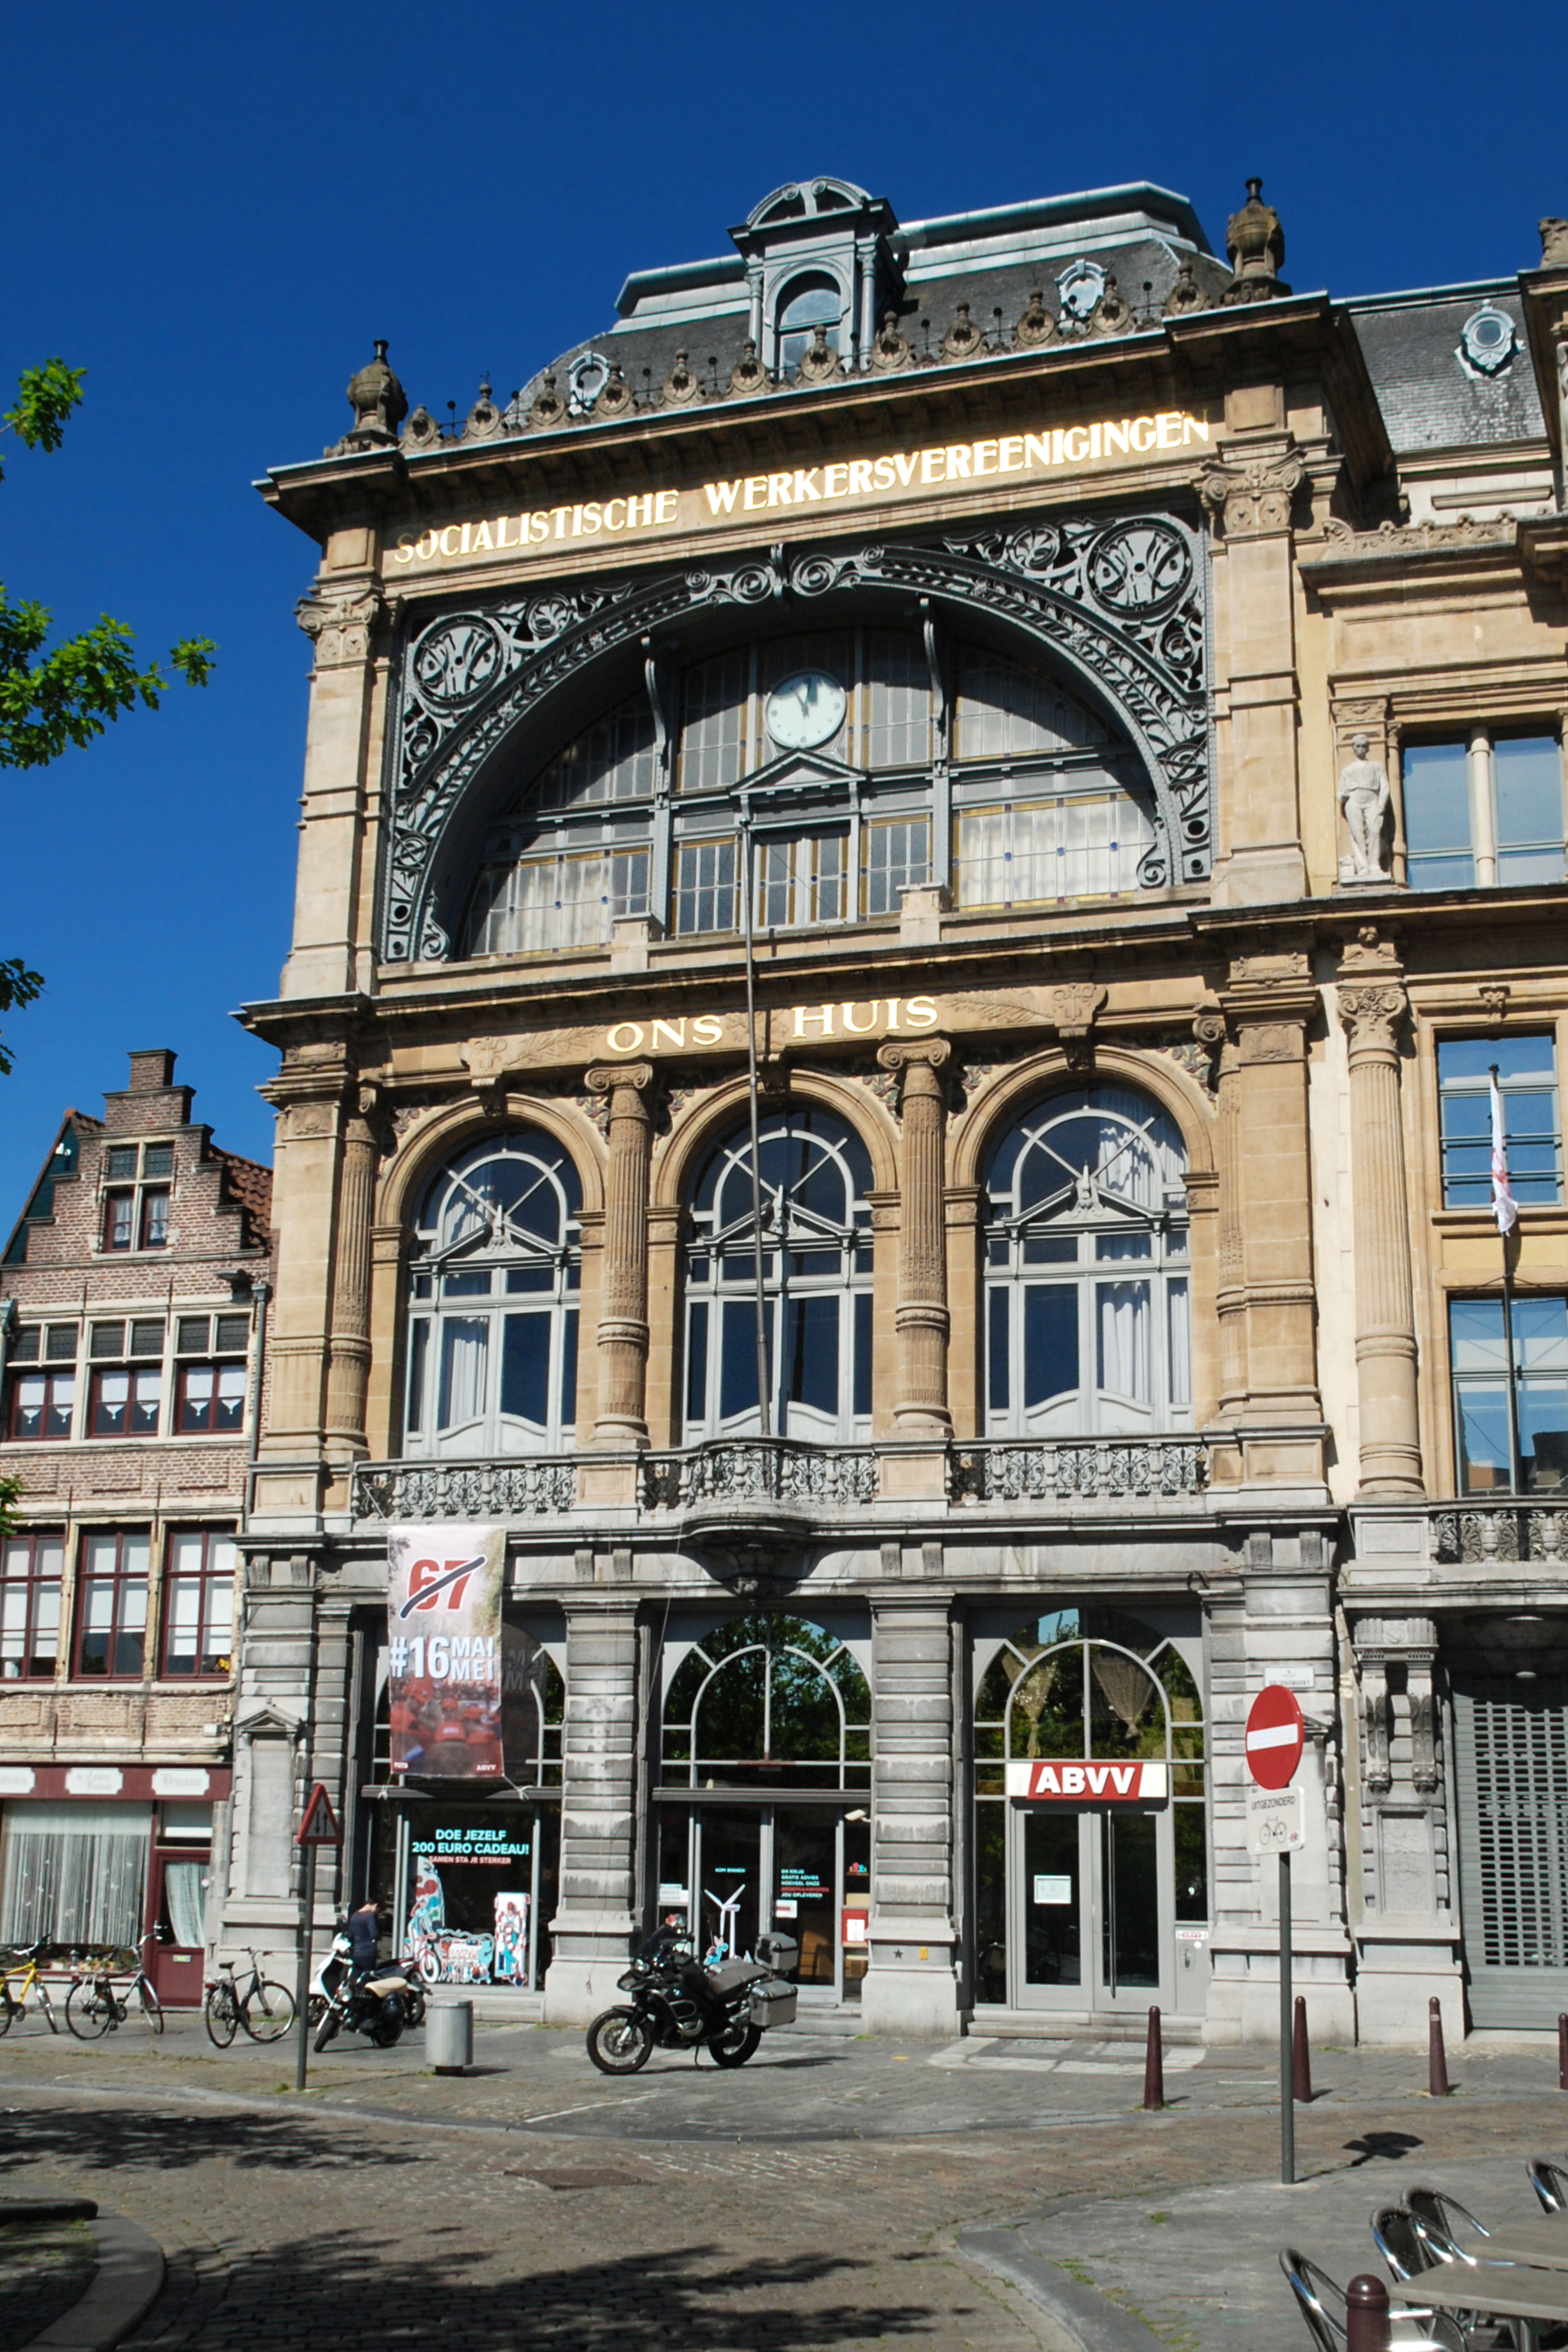 File:België - Gent - Ons Huis en Bond - - Wikimedia